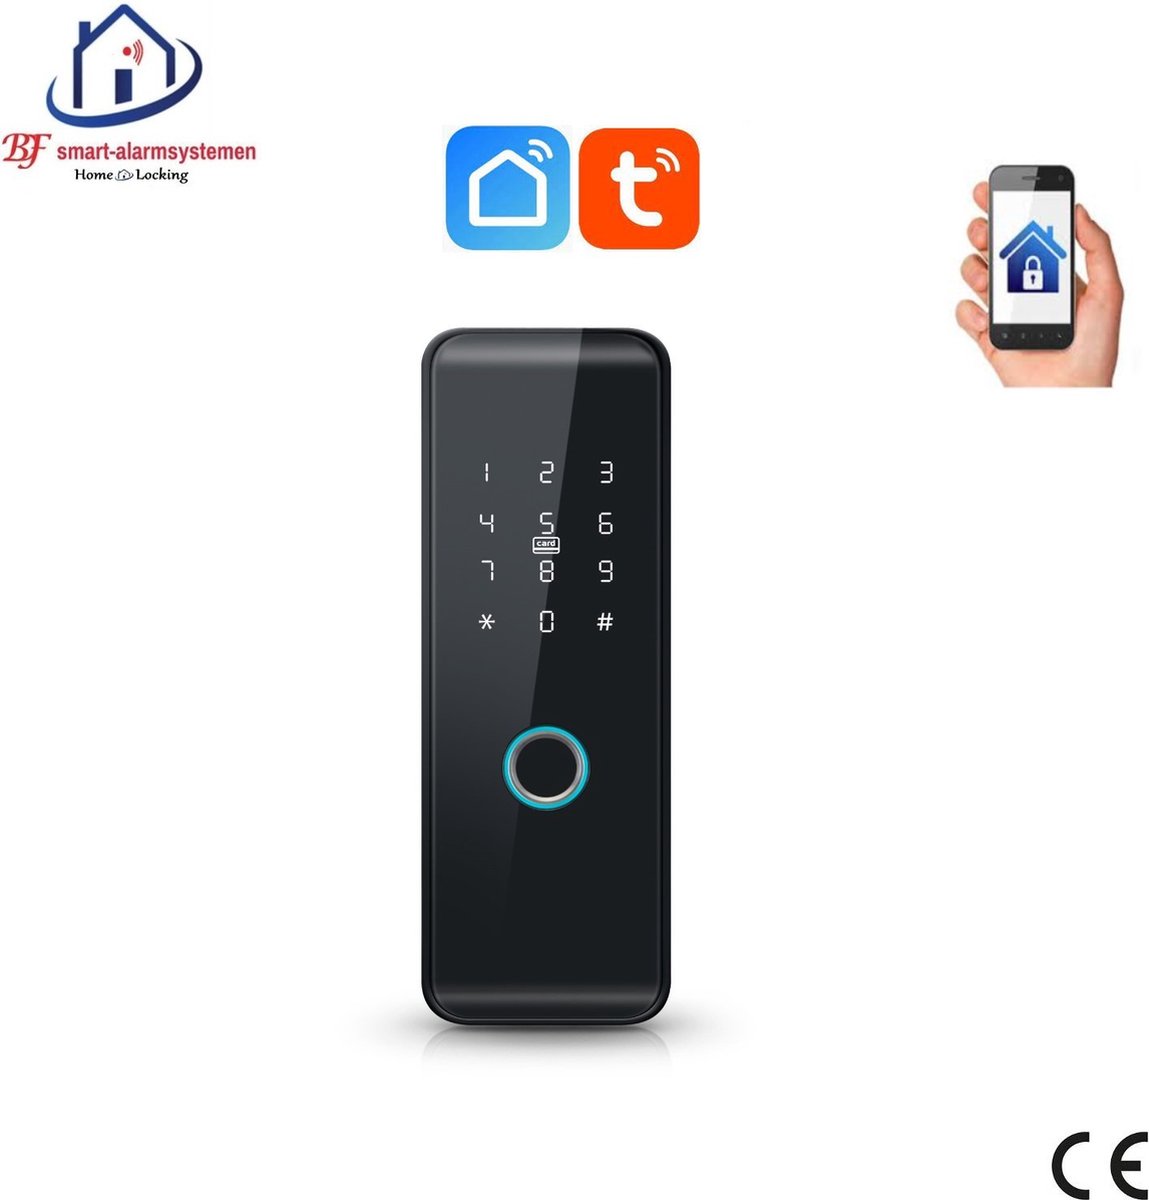 Bluetooth-toegangscontrole door vingerafdruk,ID-kaart,wachtwoord, of met bediening via APP. T-1145